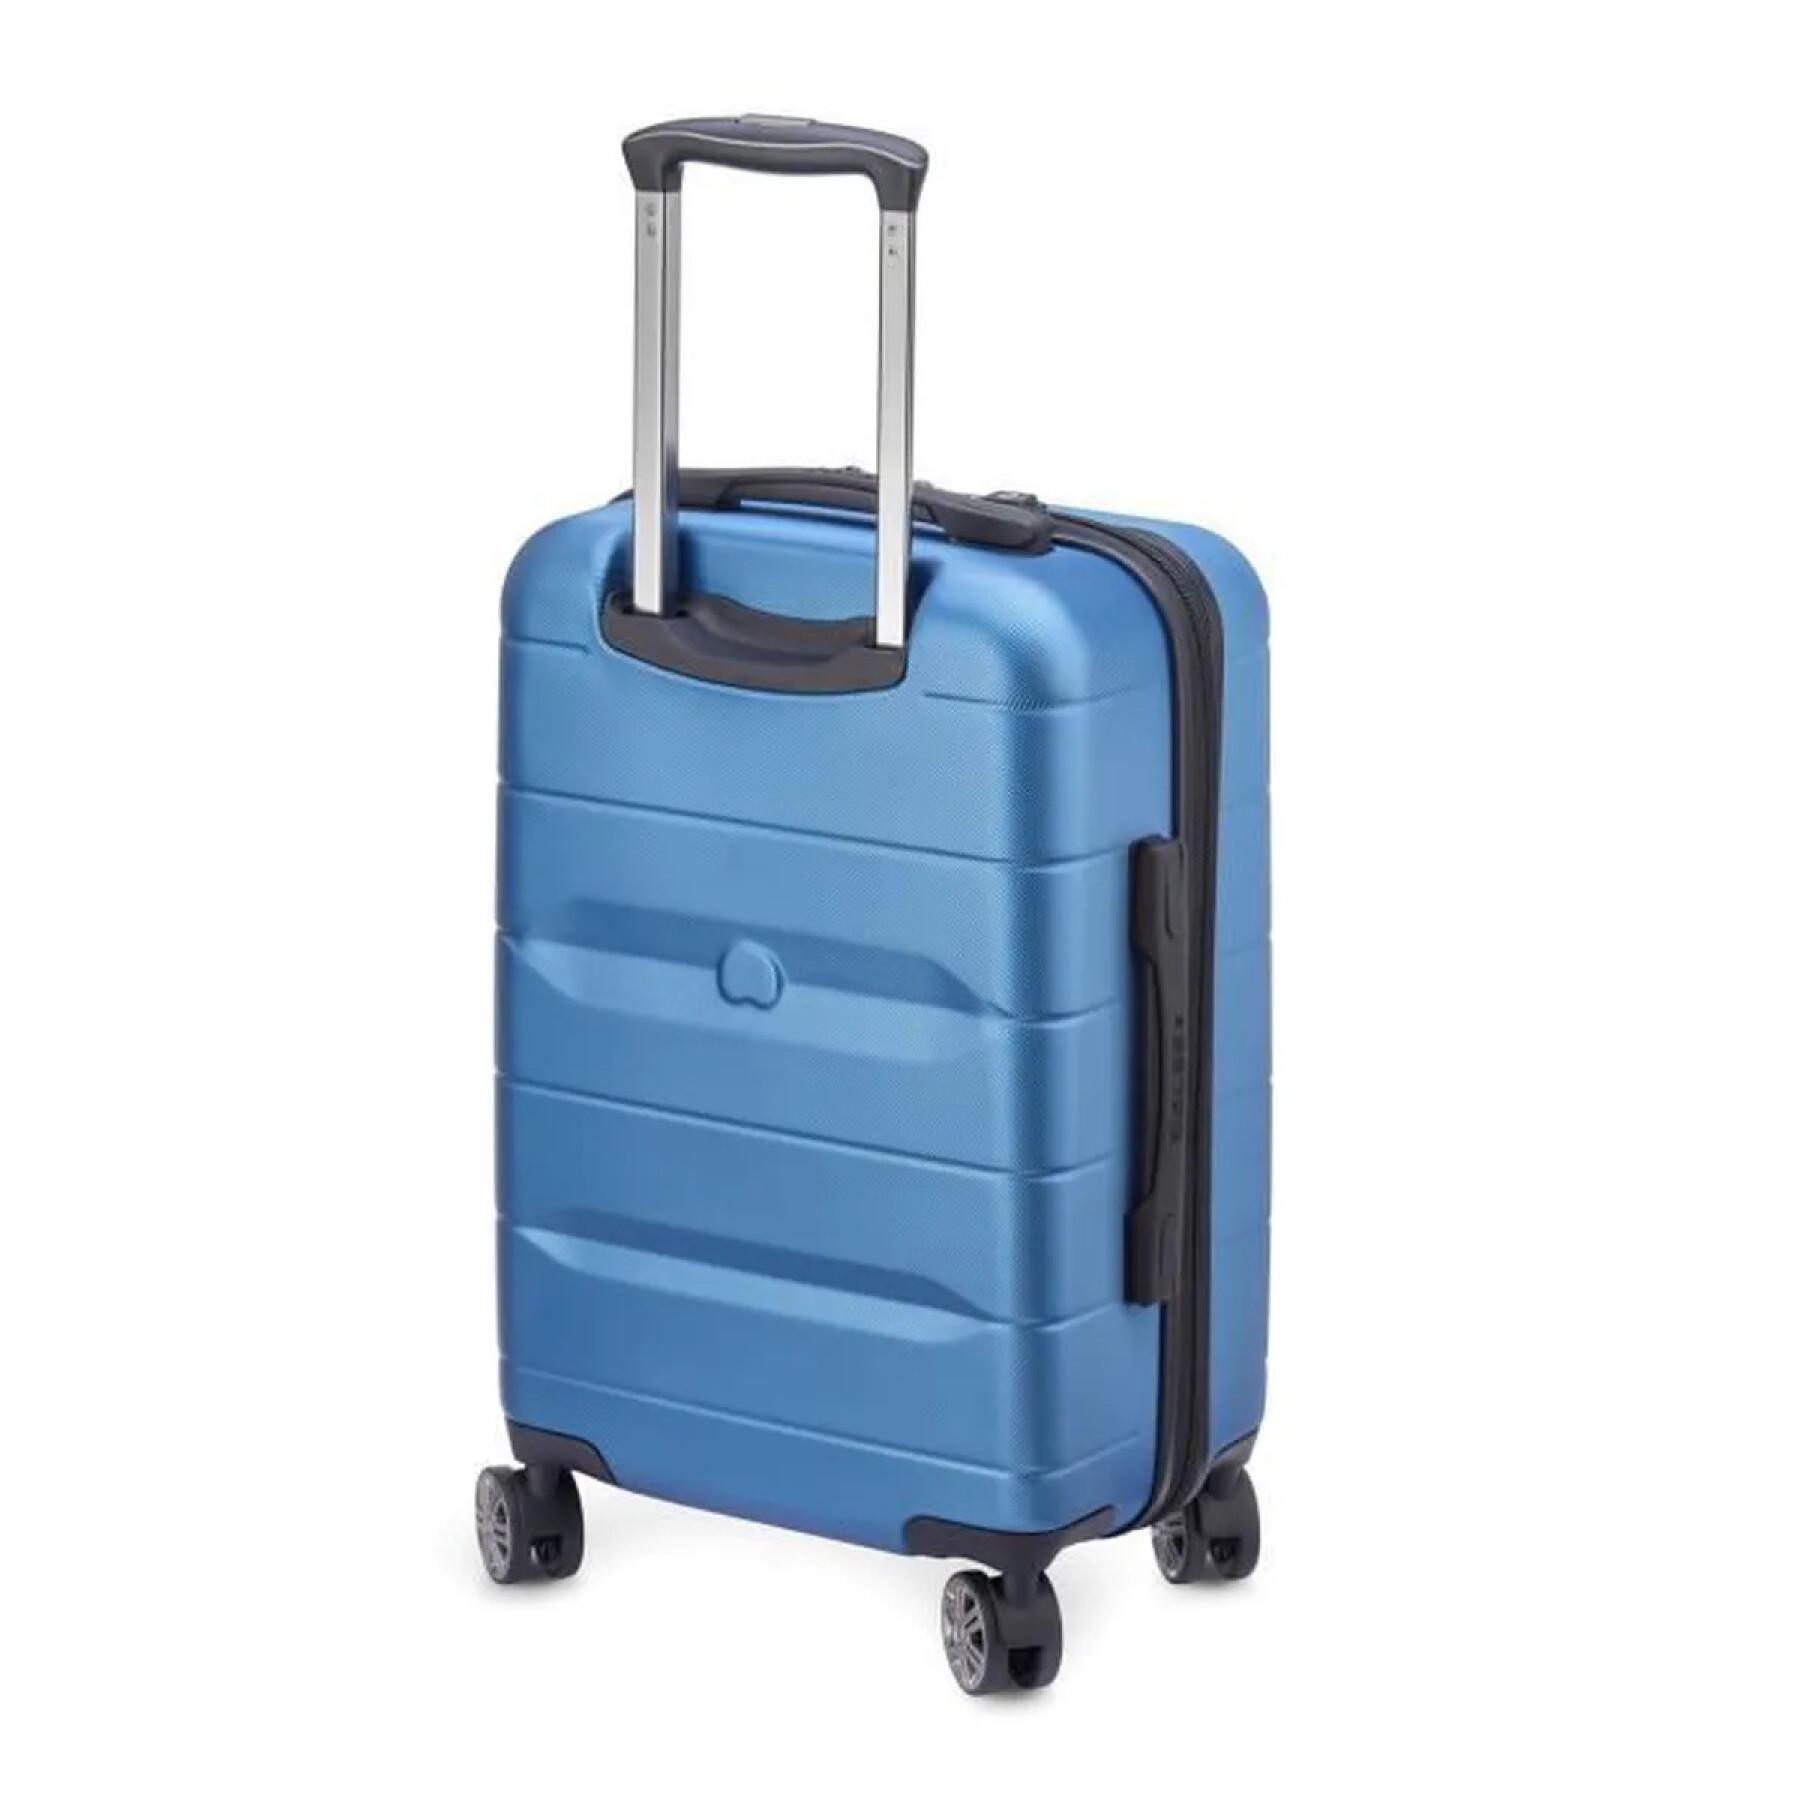 Carry-on suitcase Delsey Slim Comete Plus